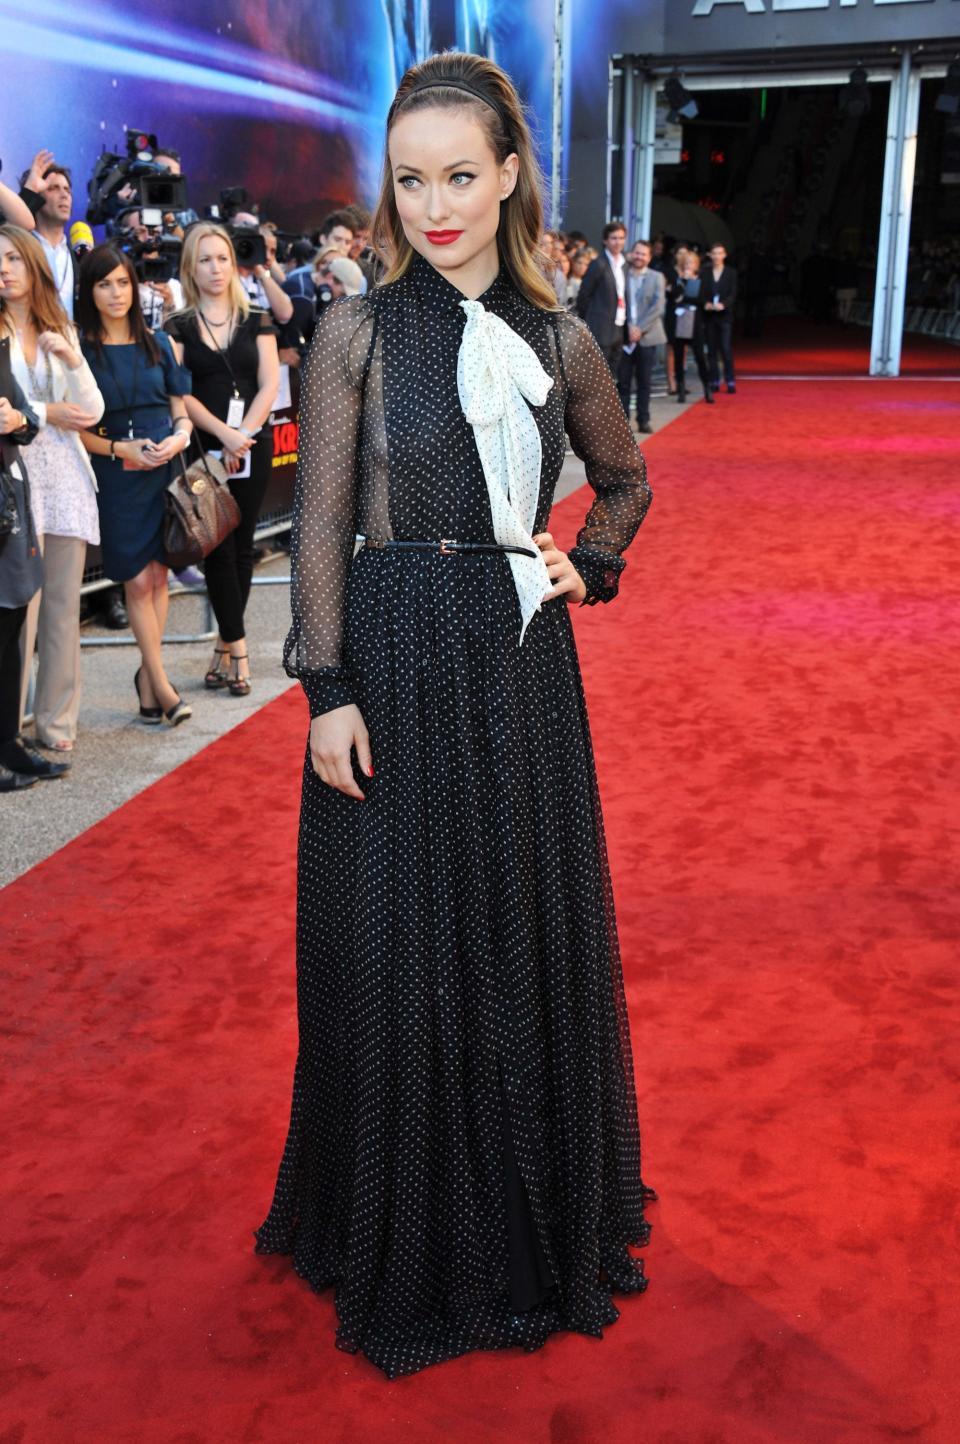 Olivia Wilde wears a black dress on a red carpet.